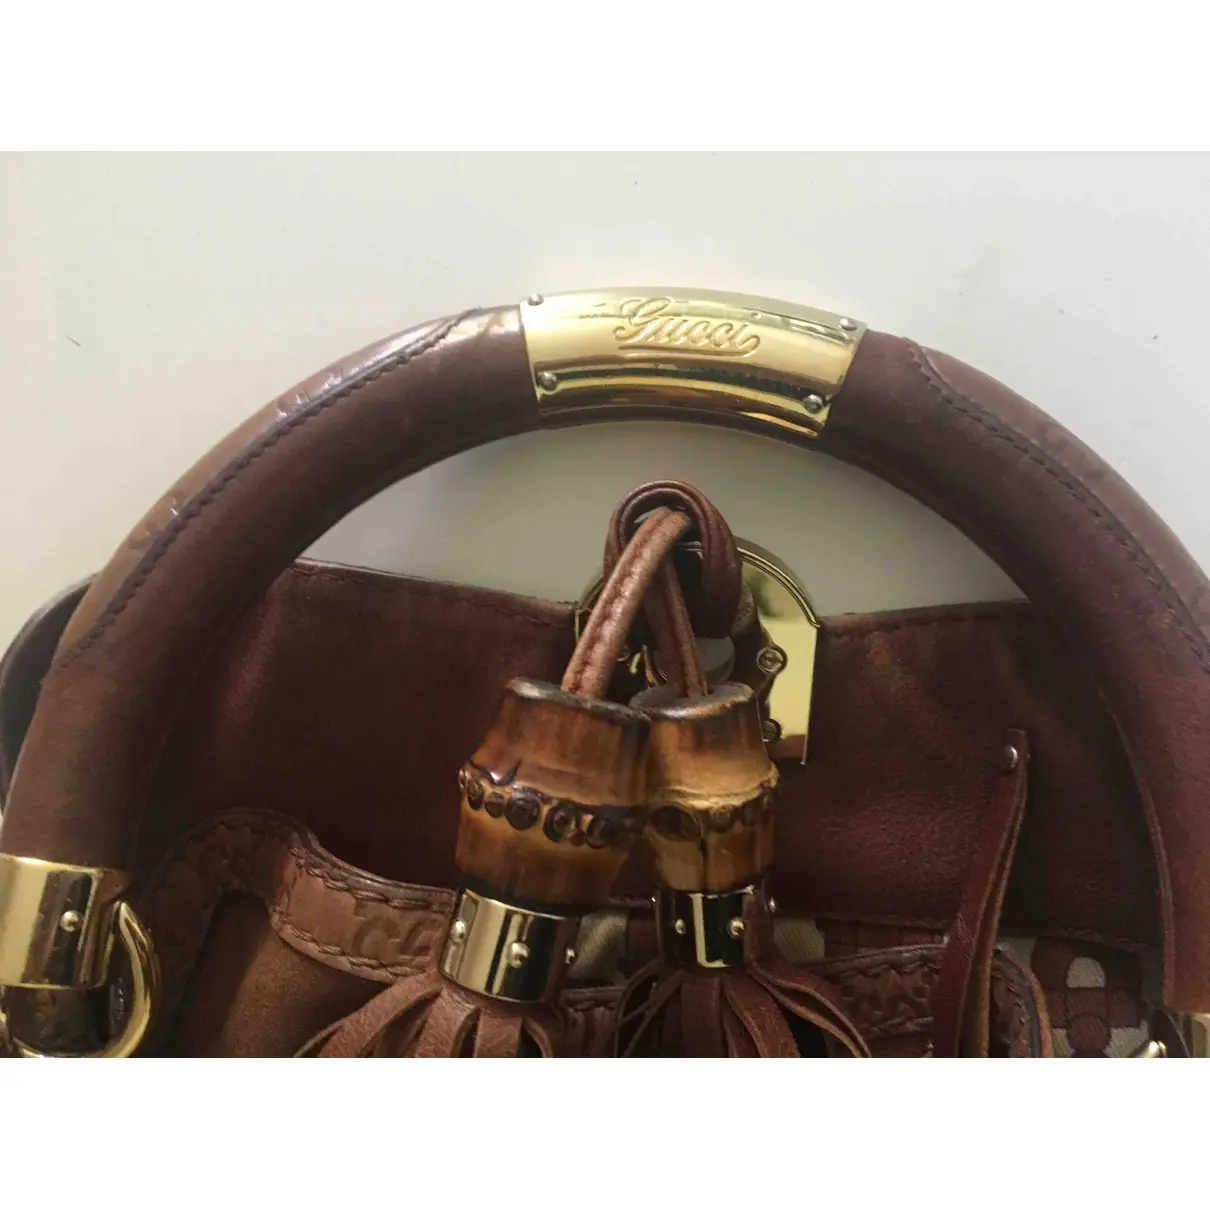 Indy leather handbag Gucci